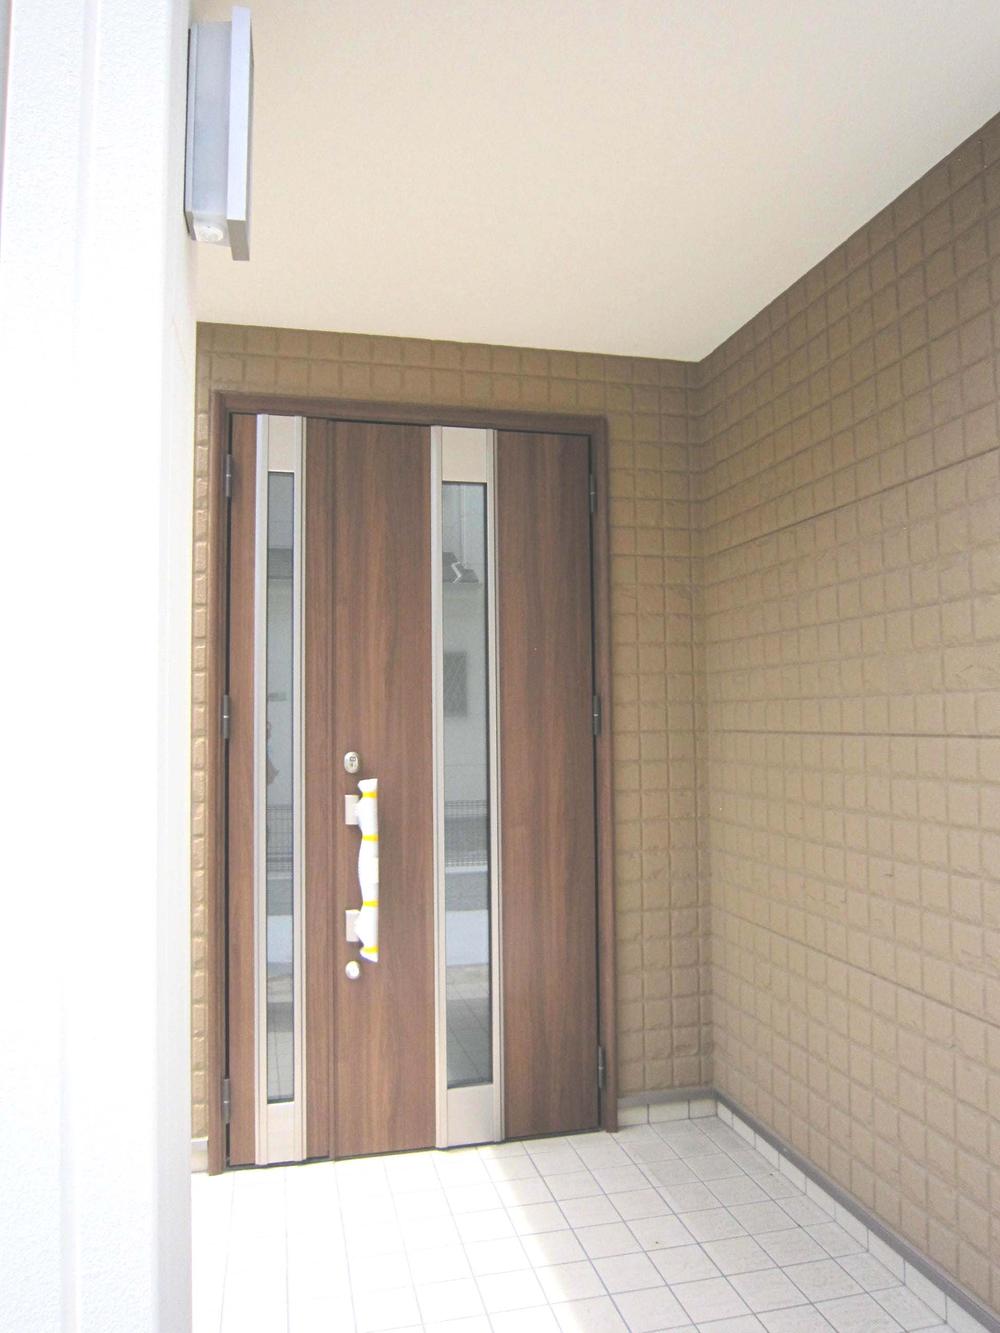 Entrance. Rikushiru Insulation entrance door